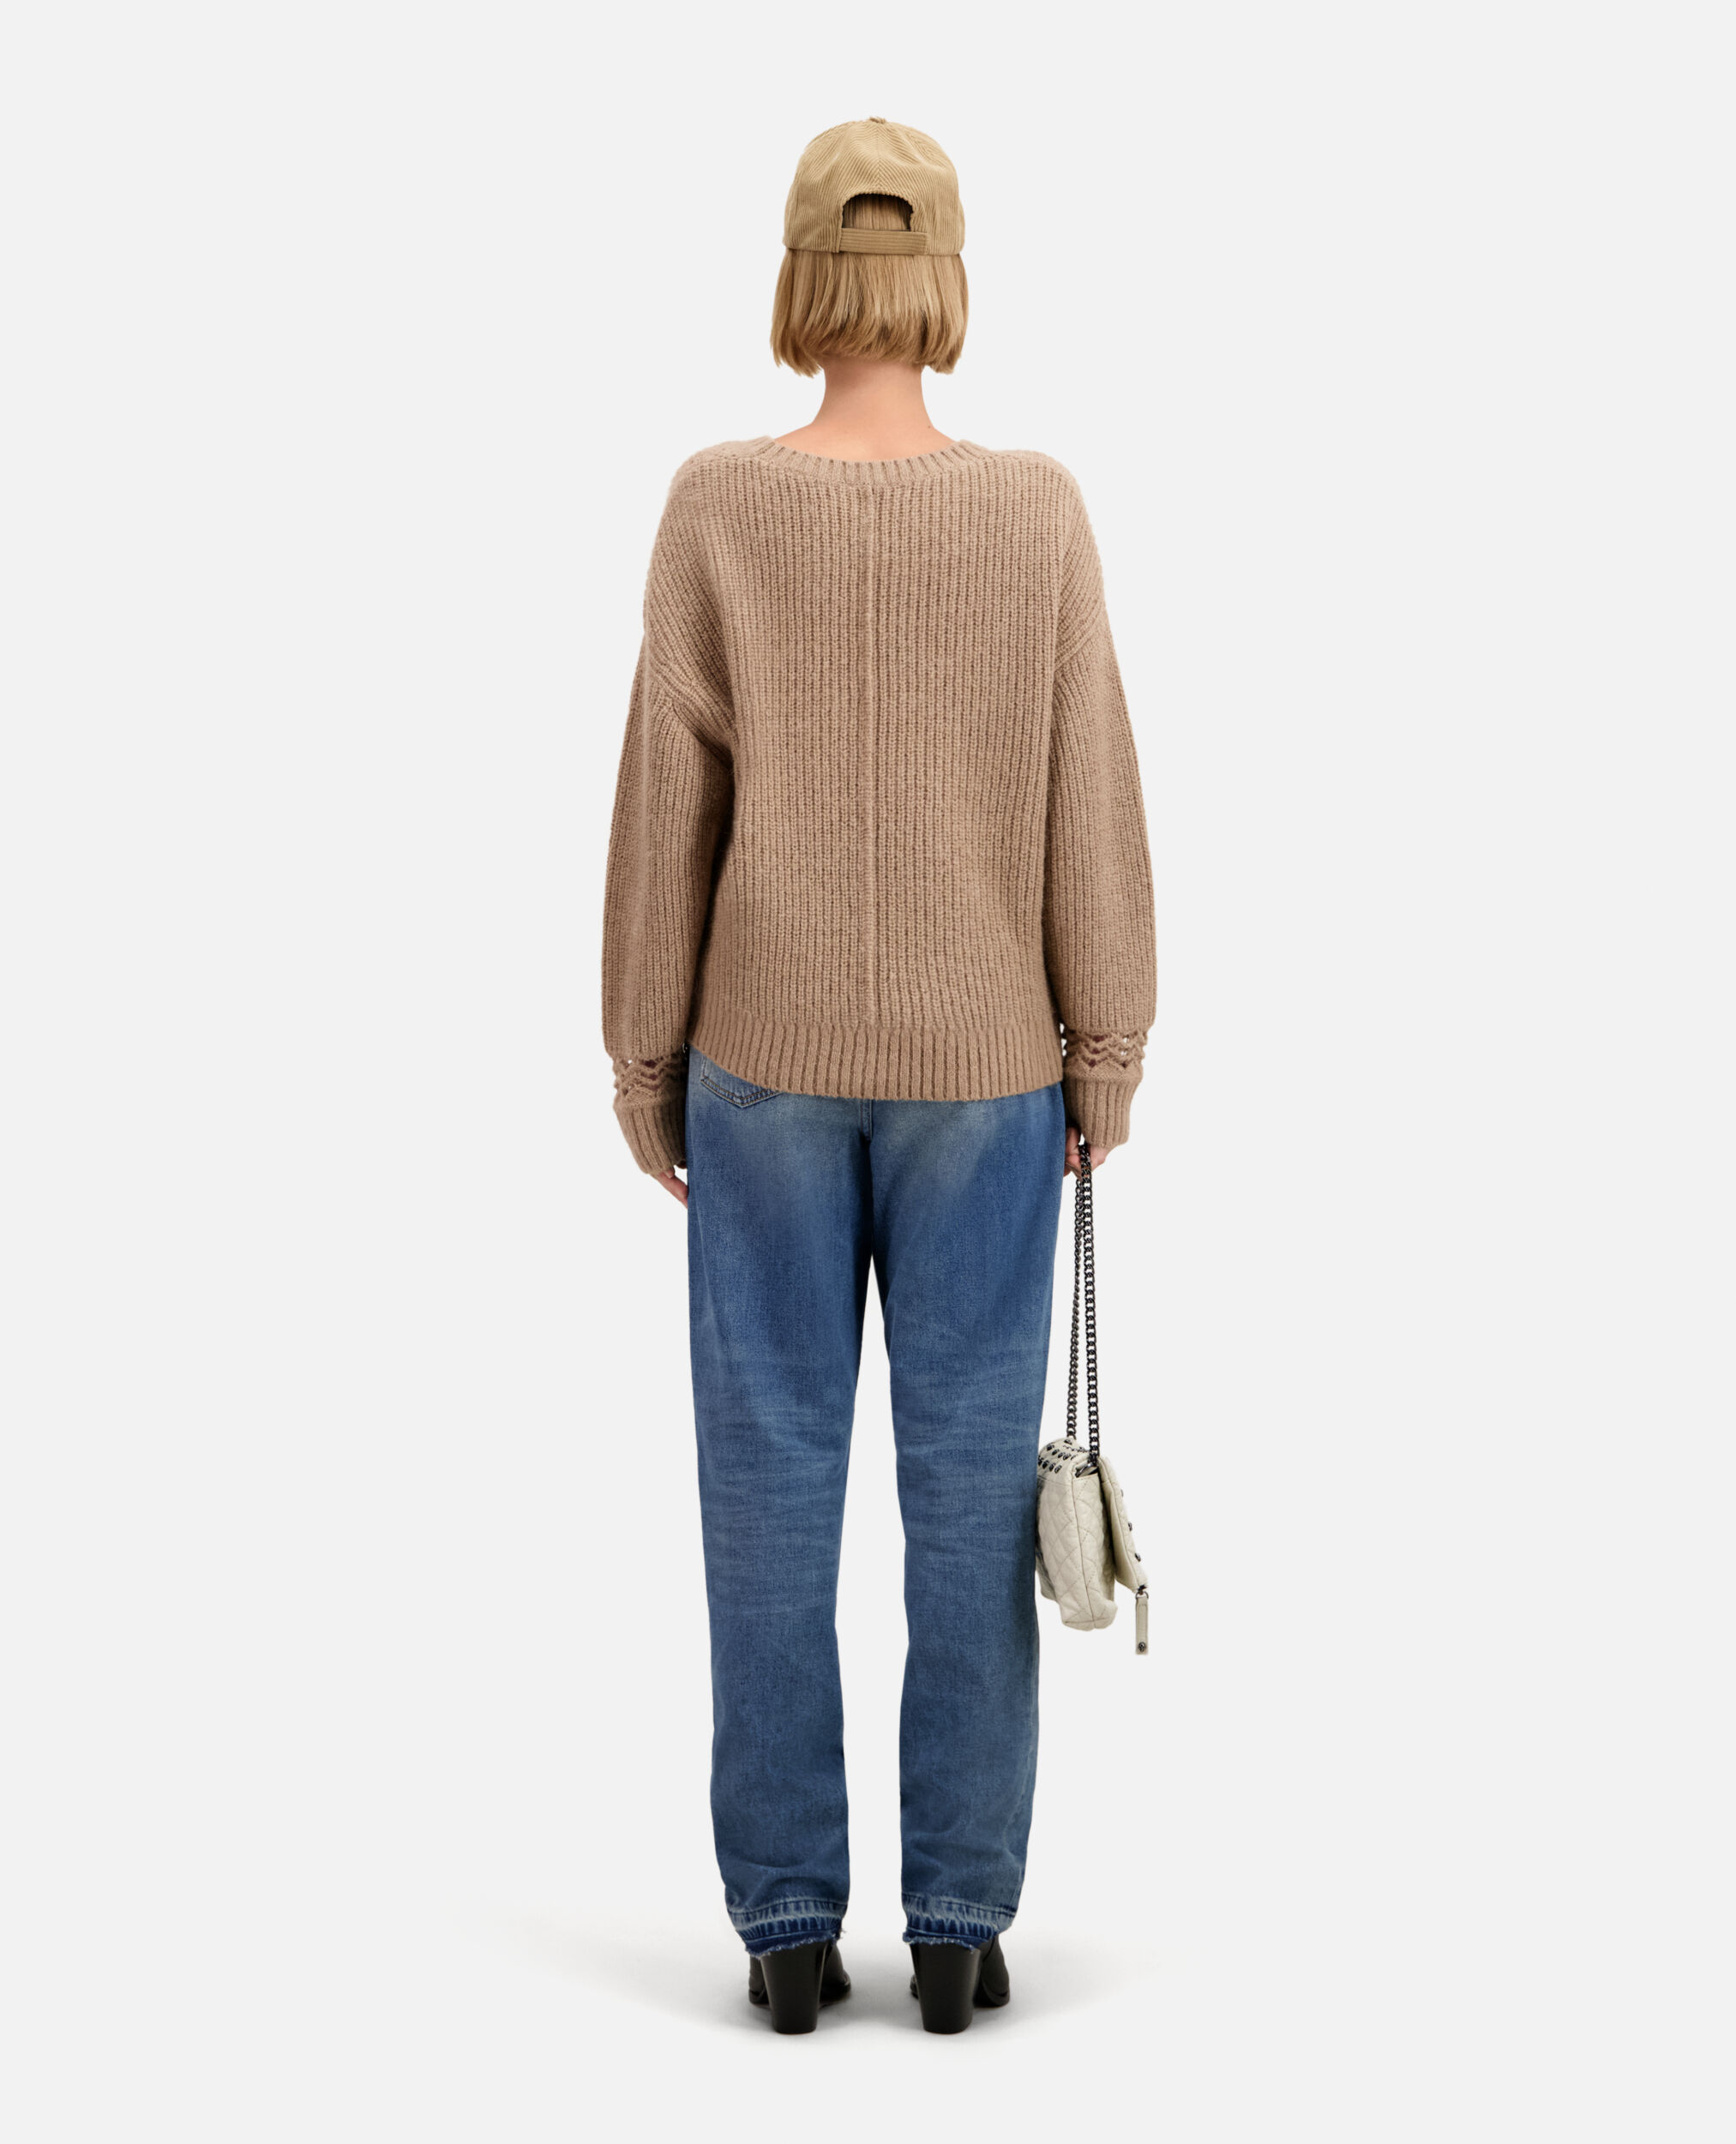 Camel wool-blend sweater, BROWN-BEIGE, hi-res image number null